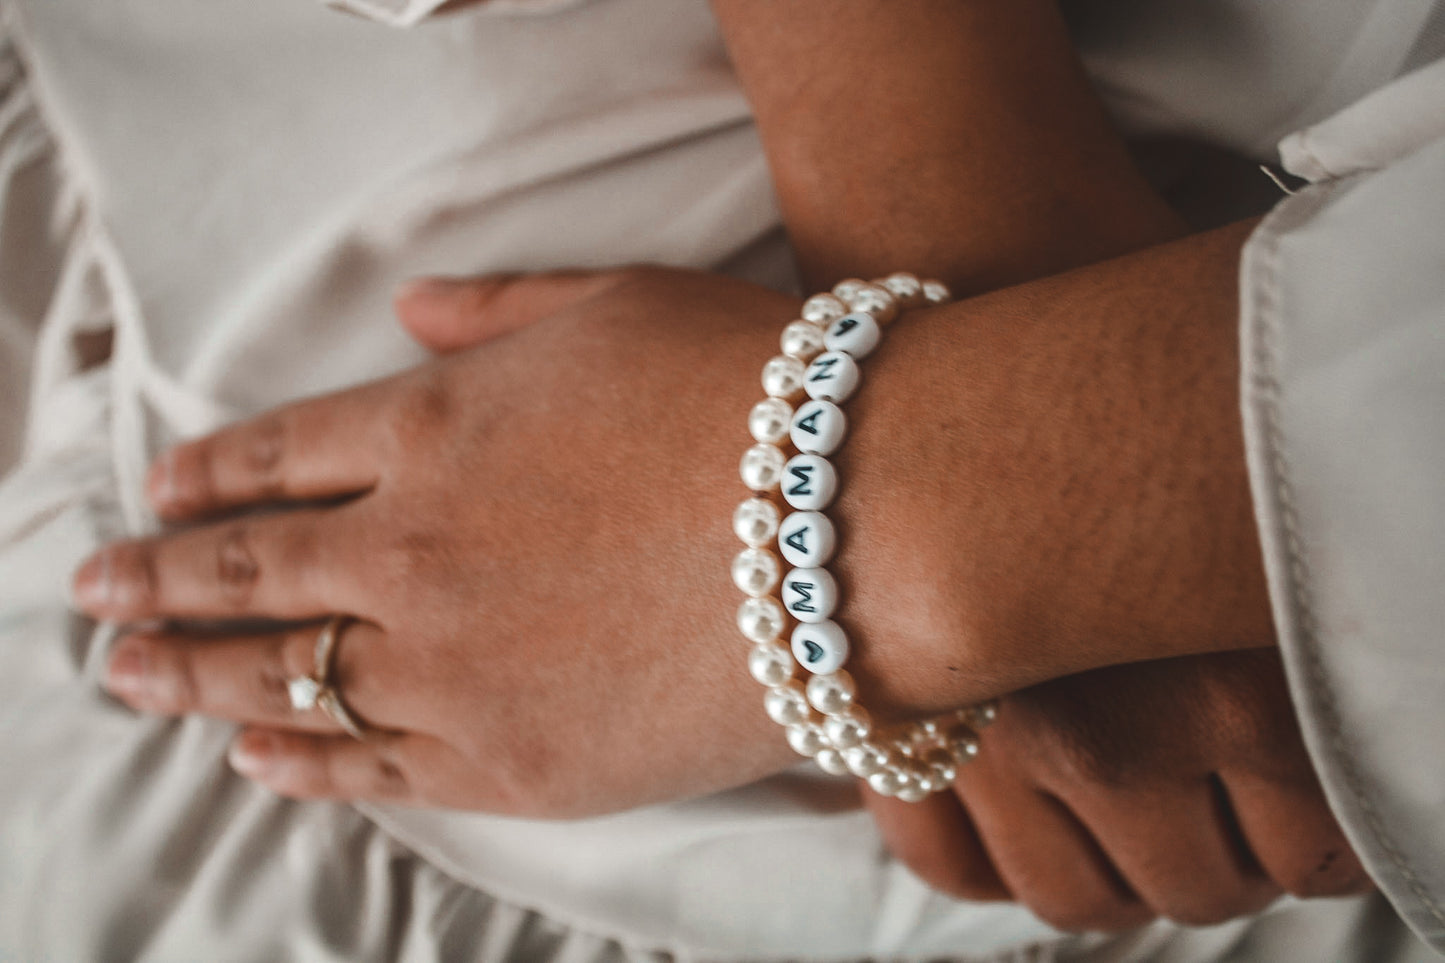 Mama bracelet